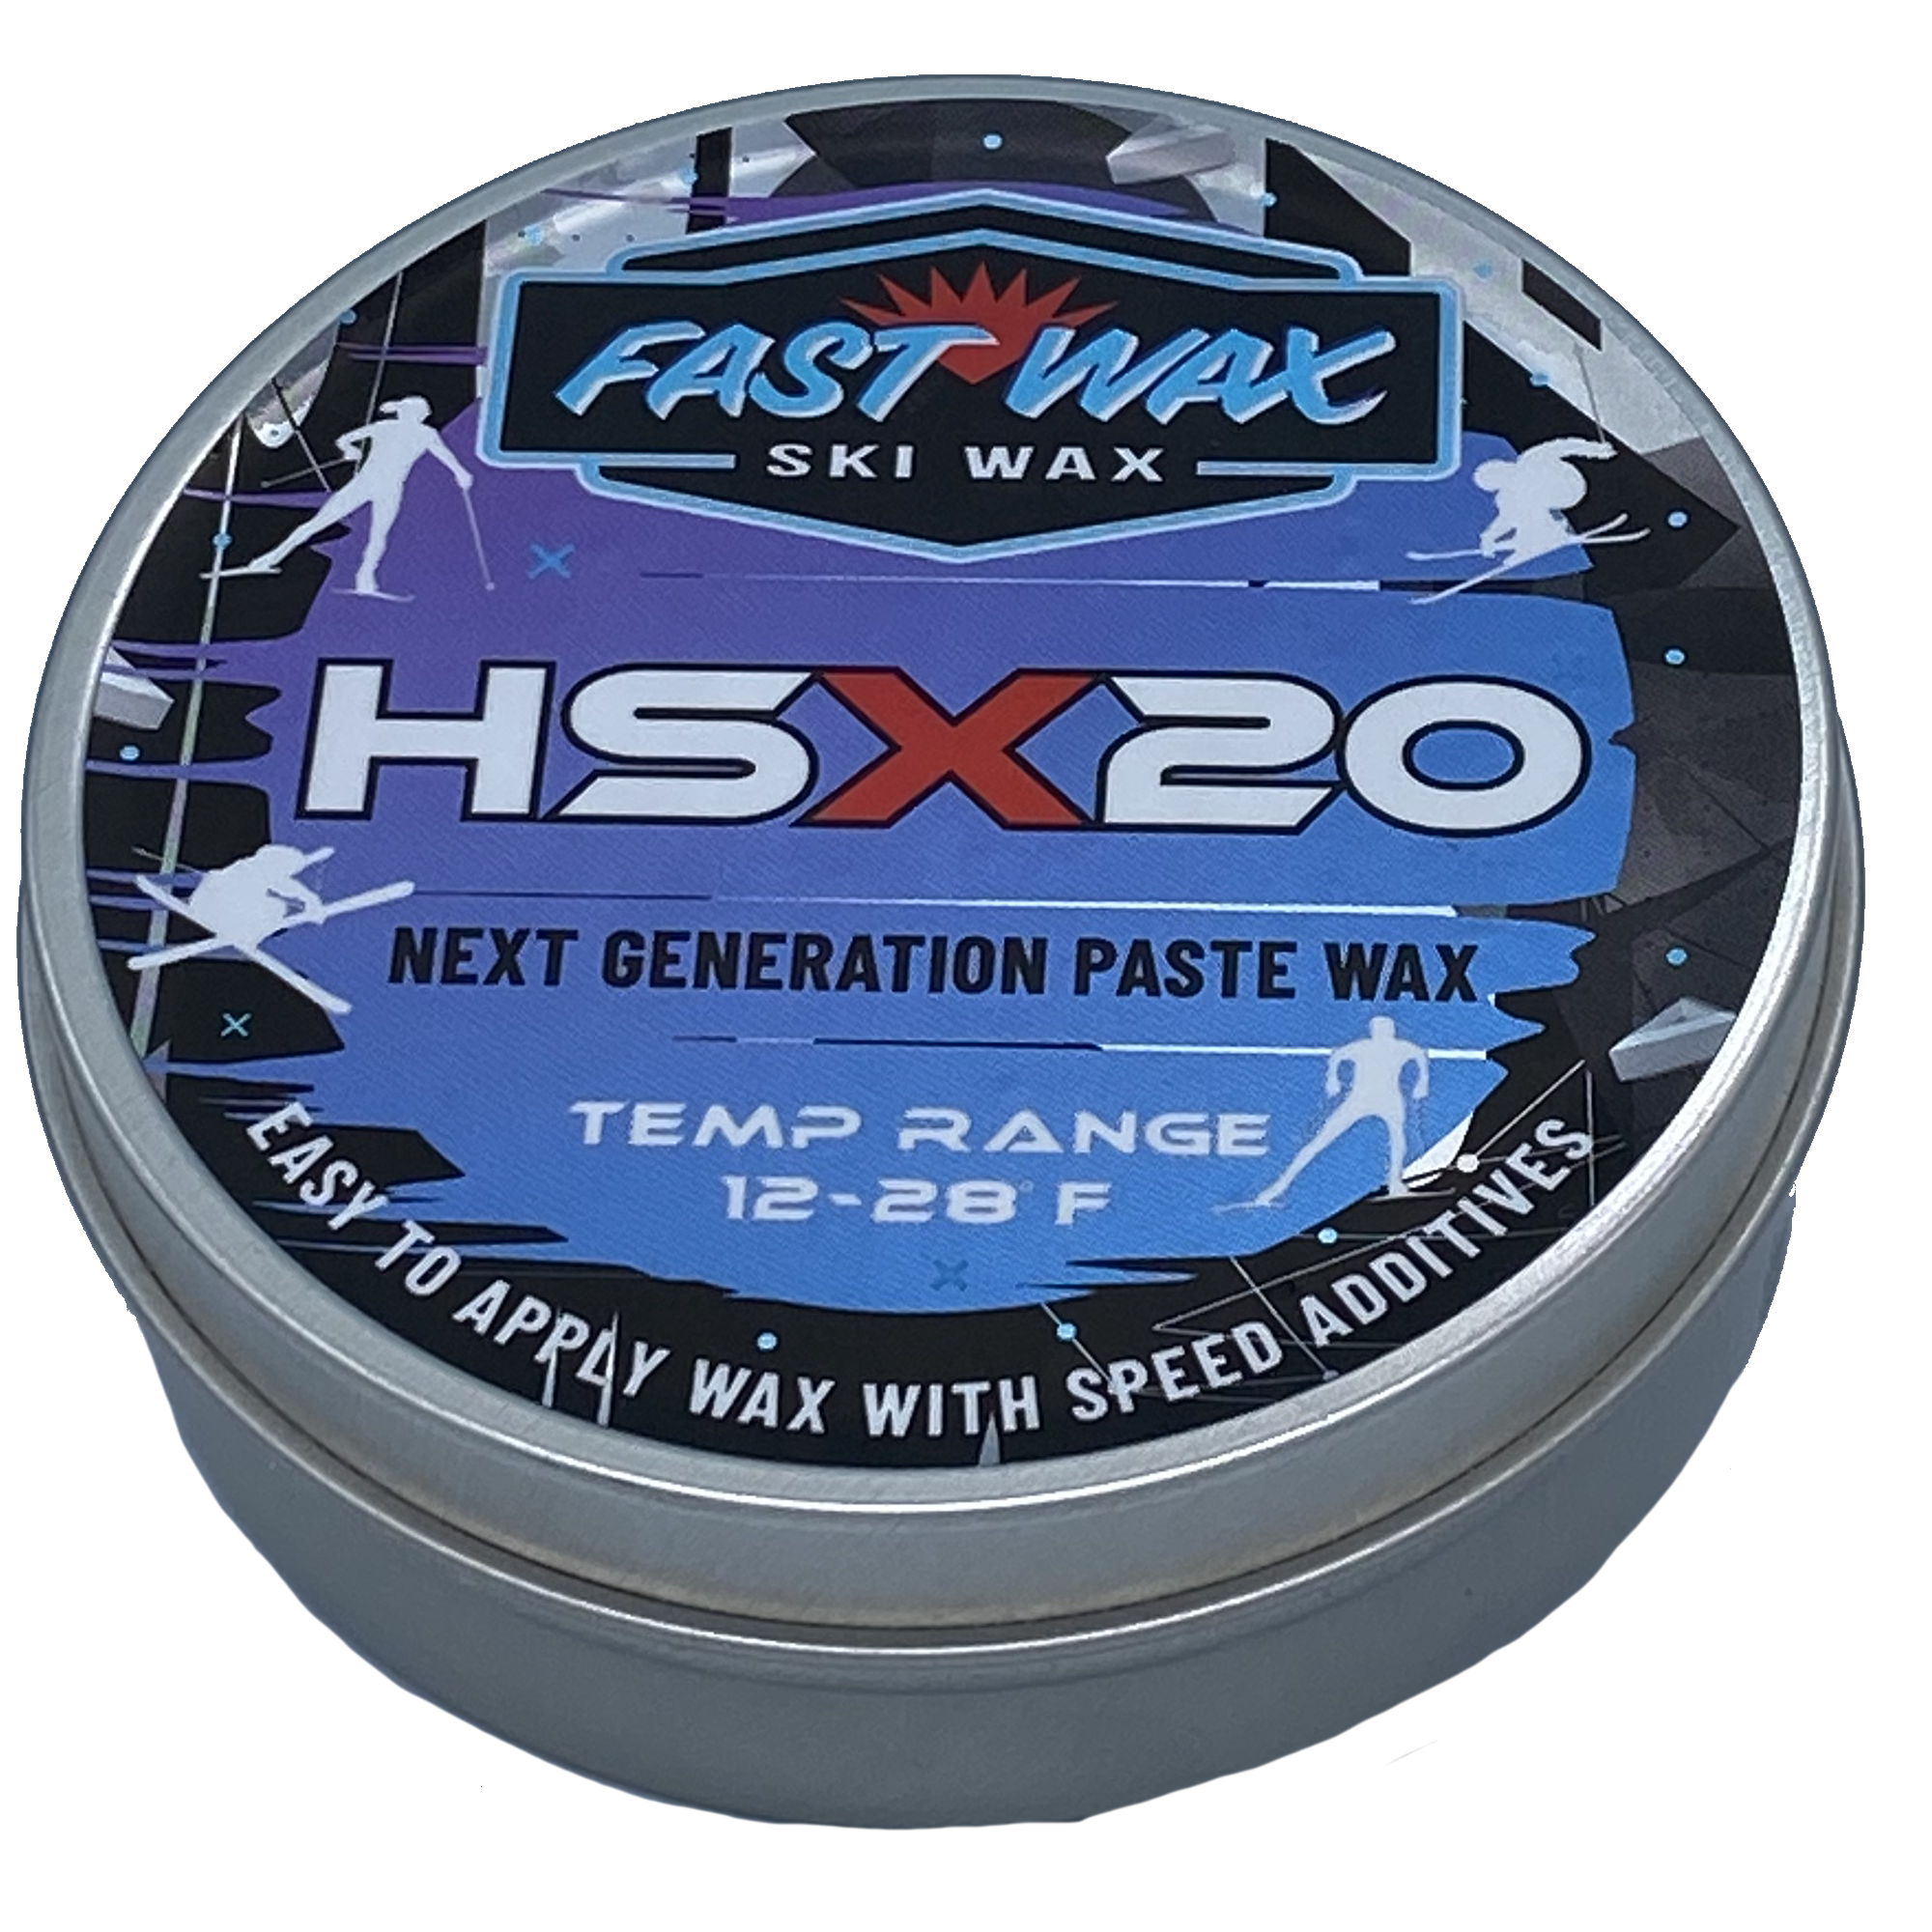 wenselijk toxiciteit rijk Fast Wax HSX 10,20,30 Paste Wax 60g, Buy all and SAVE! - World Cup Ski Shop